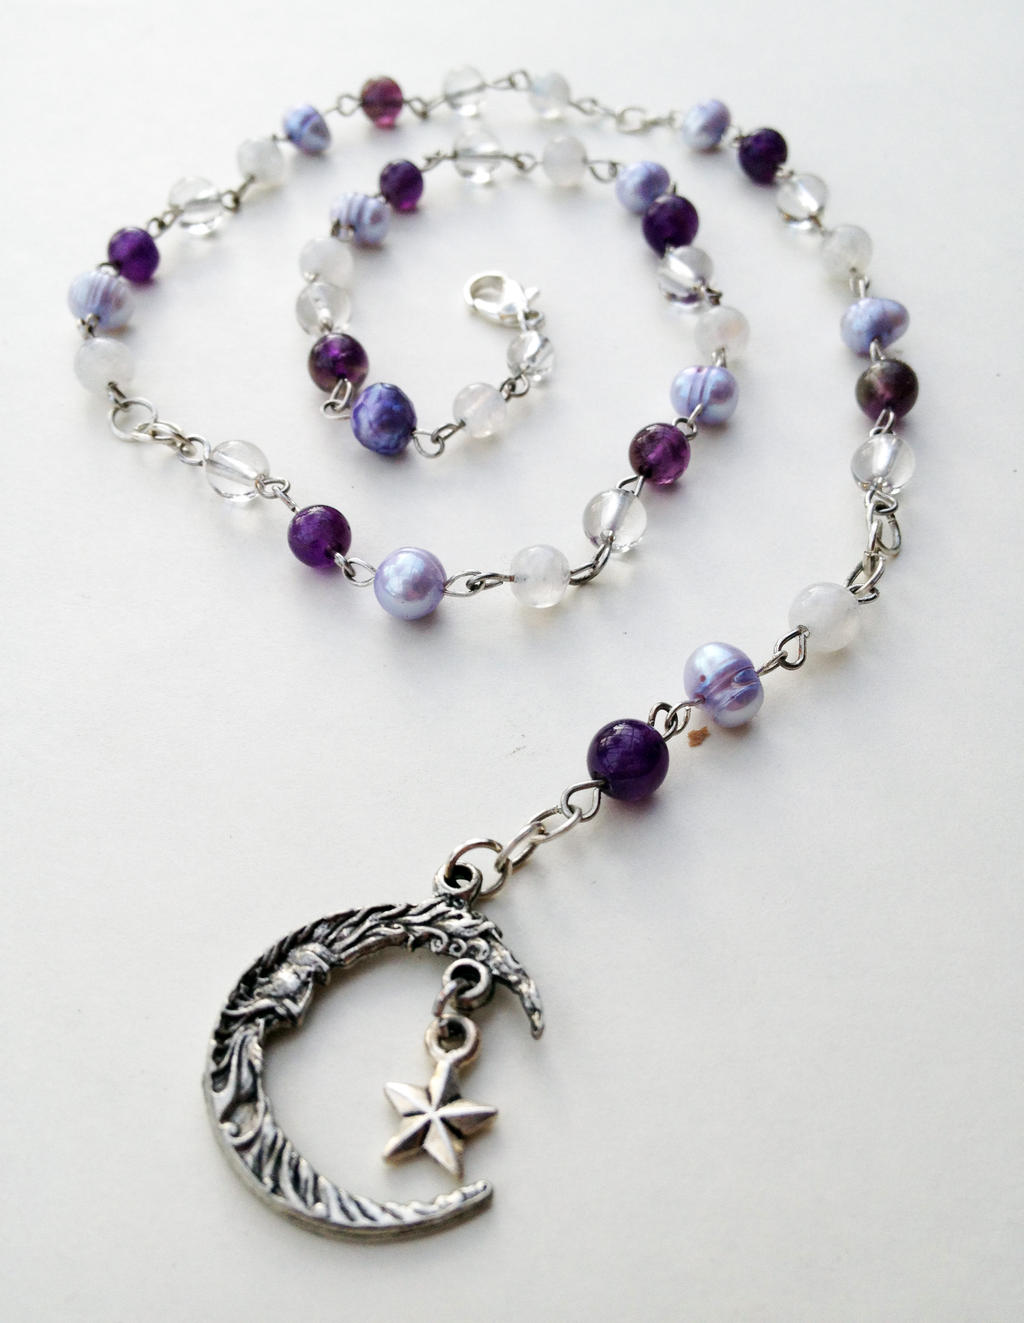 Artemis Pagan Prayer Beads/Rosary/Witch's Ladder